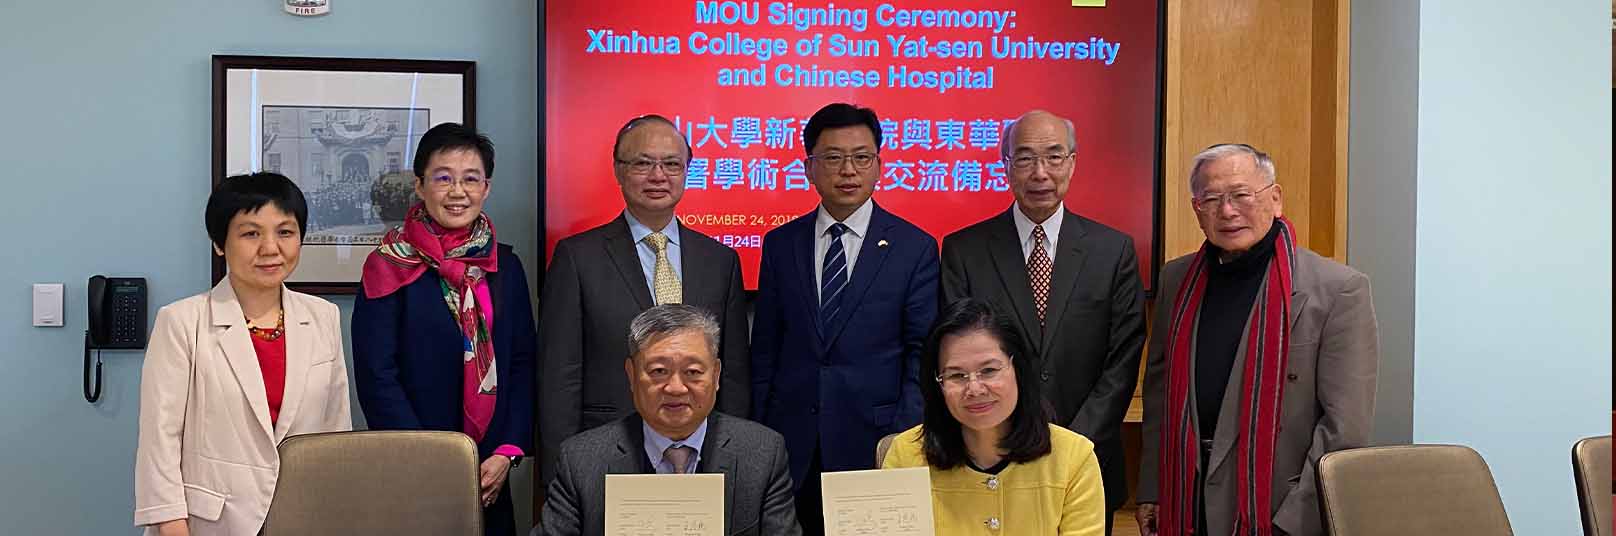 MOU signed with China’s Sun Yat-sen University’s Xinhua College to establish academic partnership